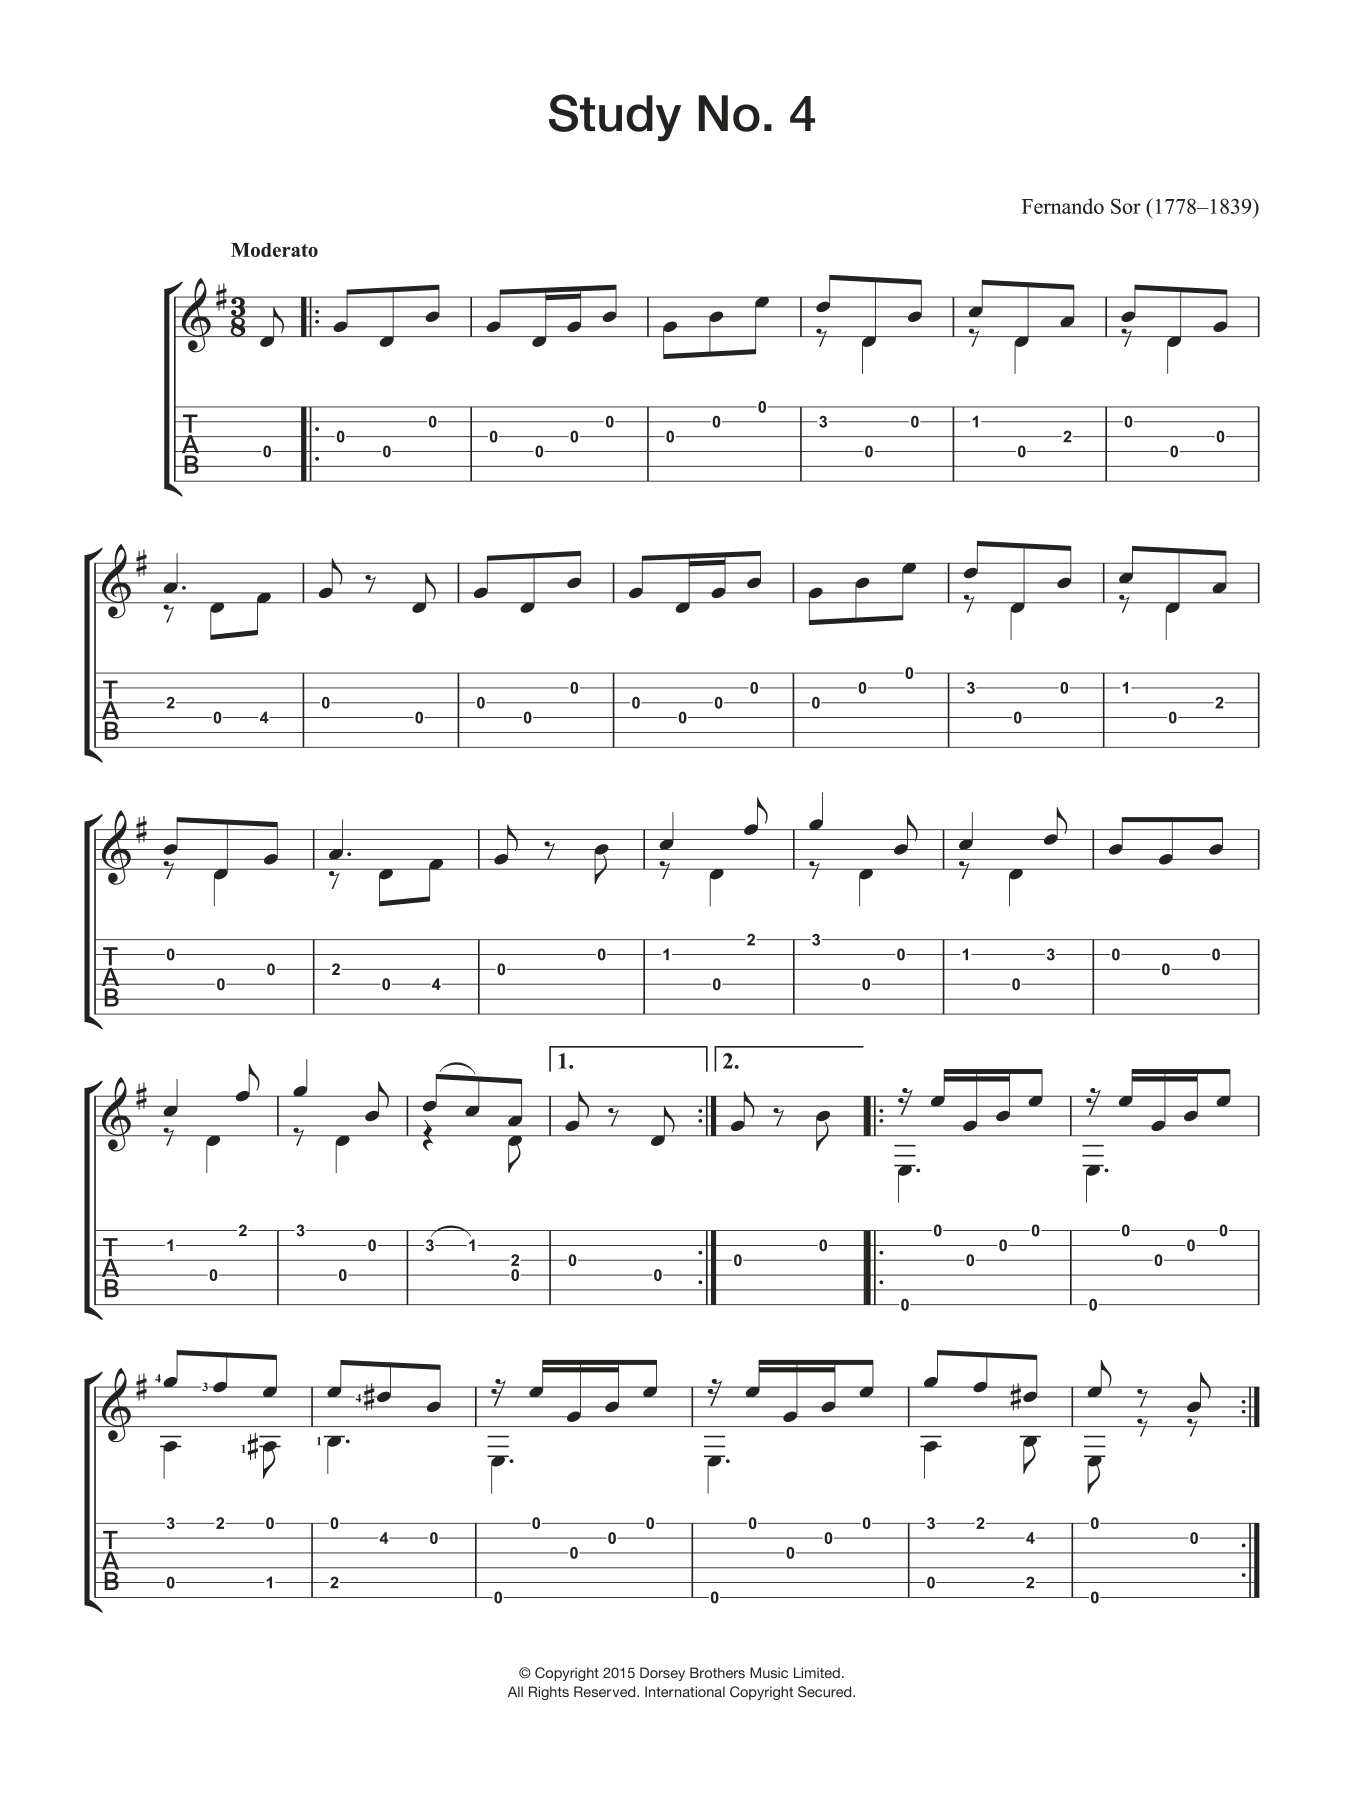 Fernando Sor Study No. 4 Sheet Music Notes & Chords for Guitar - Download or Print PDF